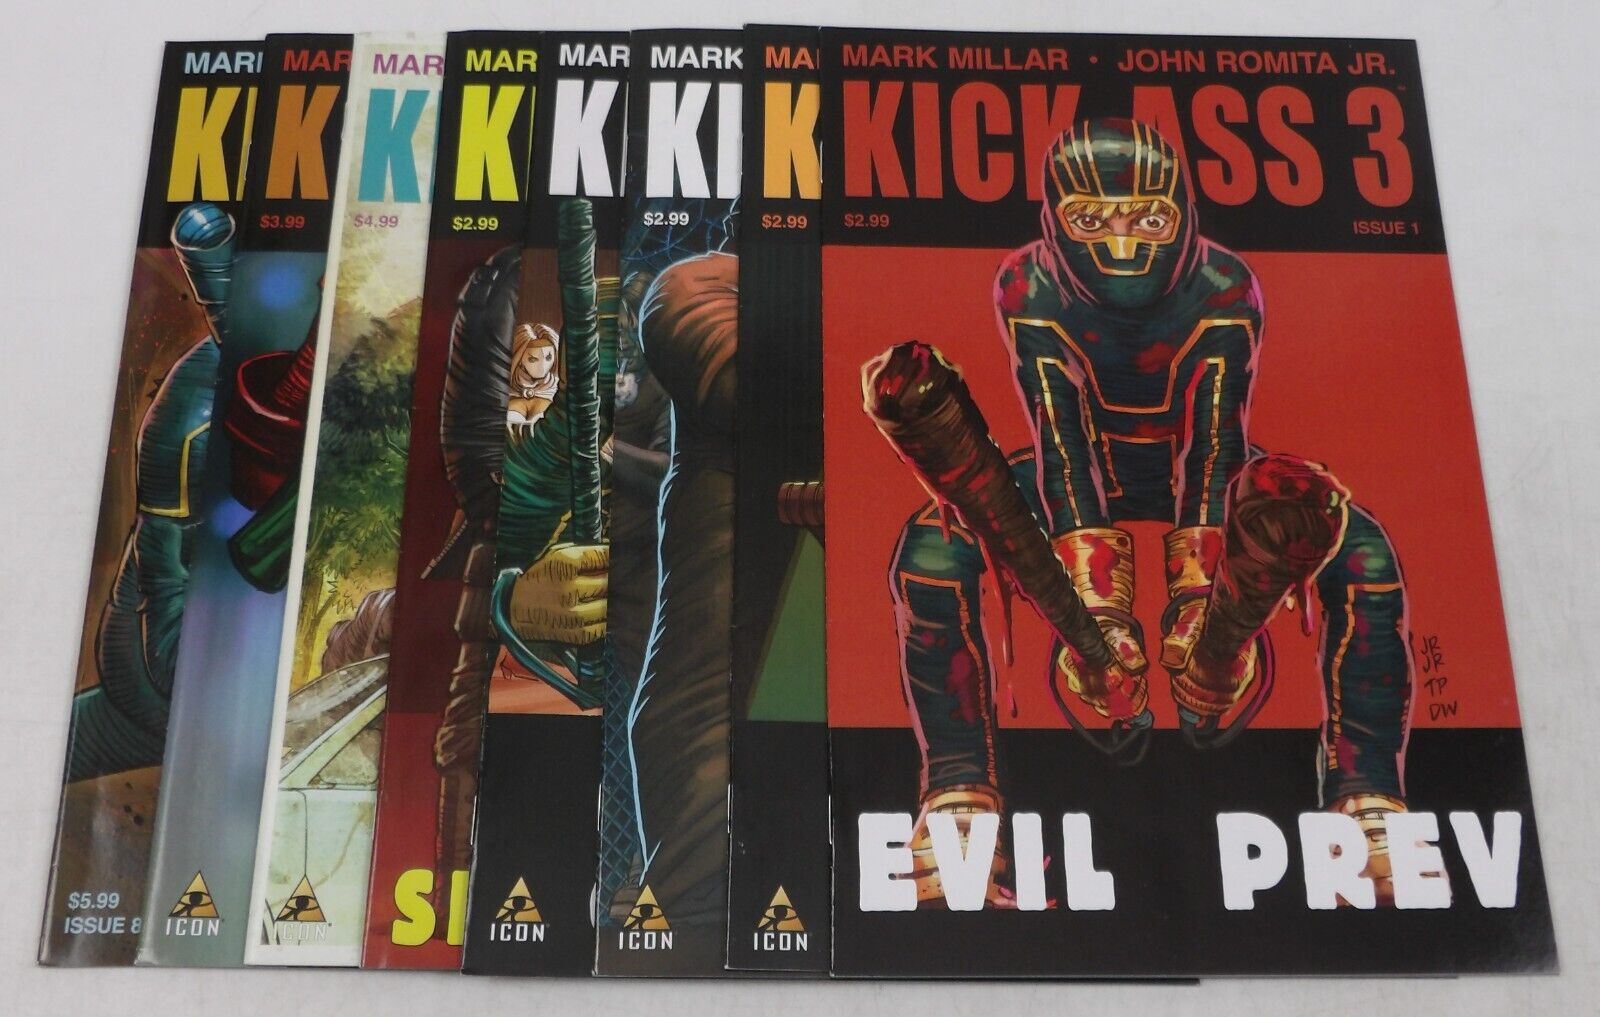 Kick-Ass 3 #1-8 VF complete series - Mark Millar - John Romita Jr - 1st print